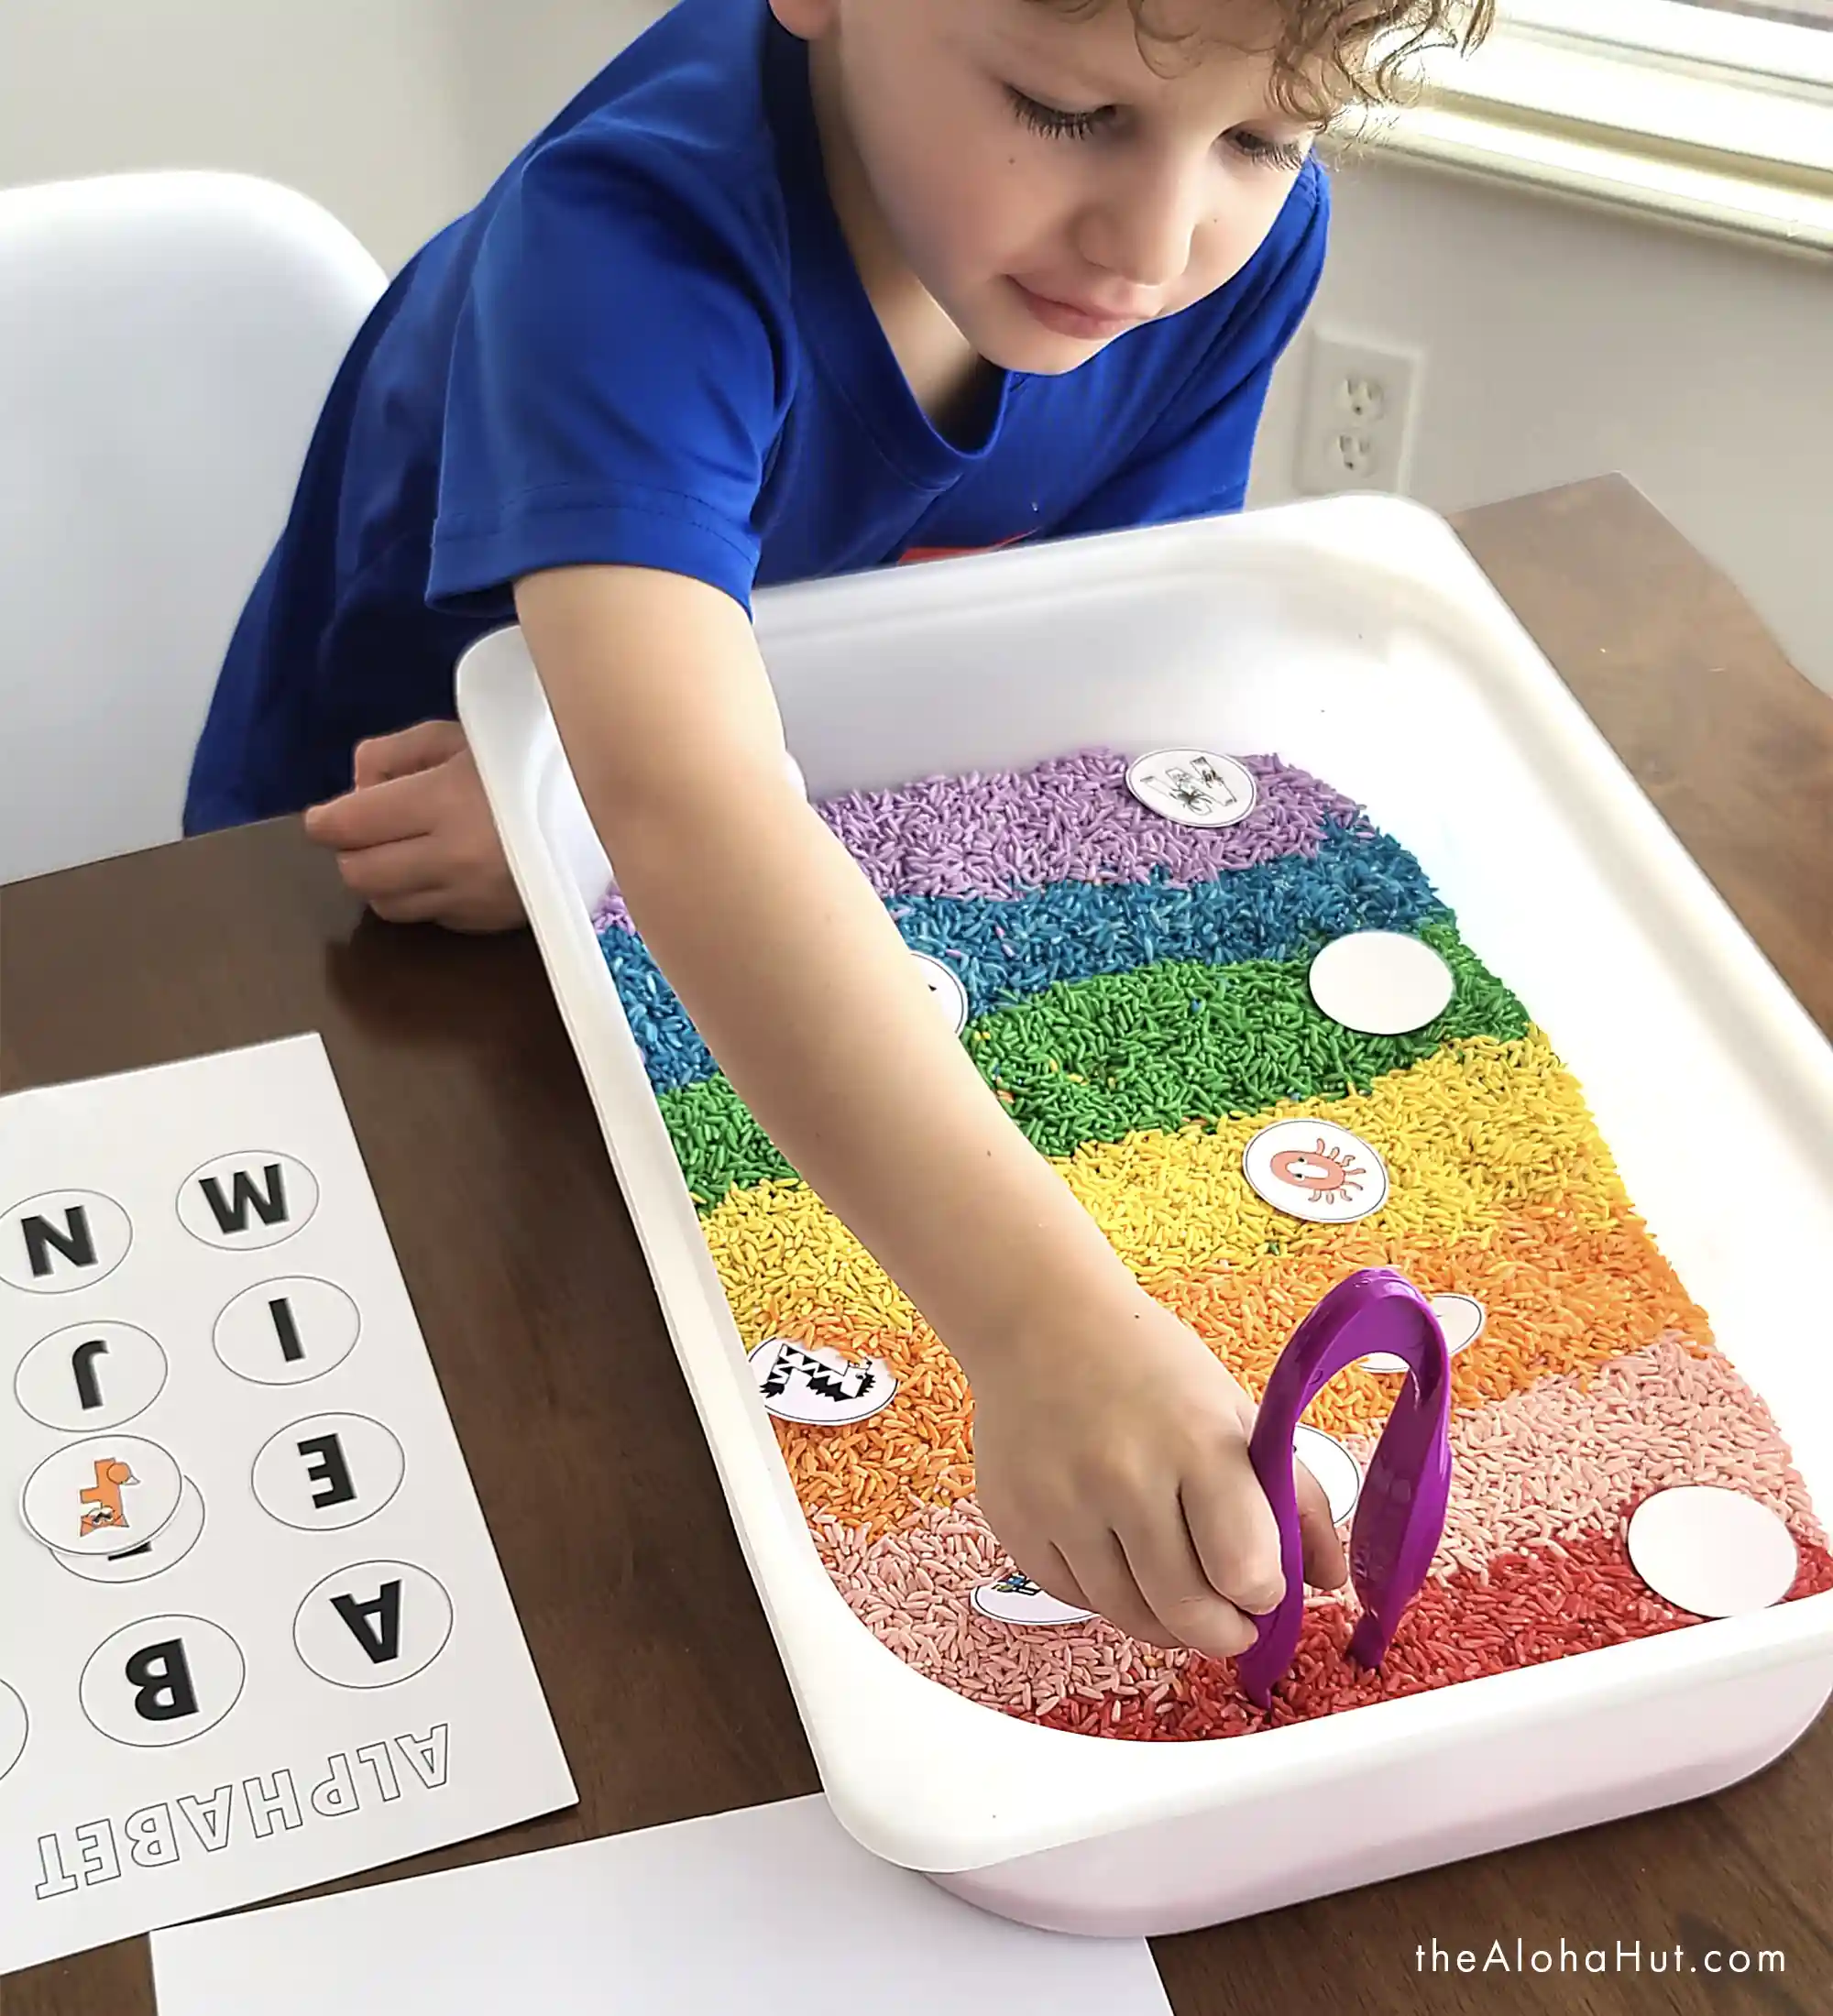 Montessori Toddler Preschool Activity - Alphabet Match